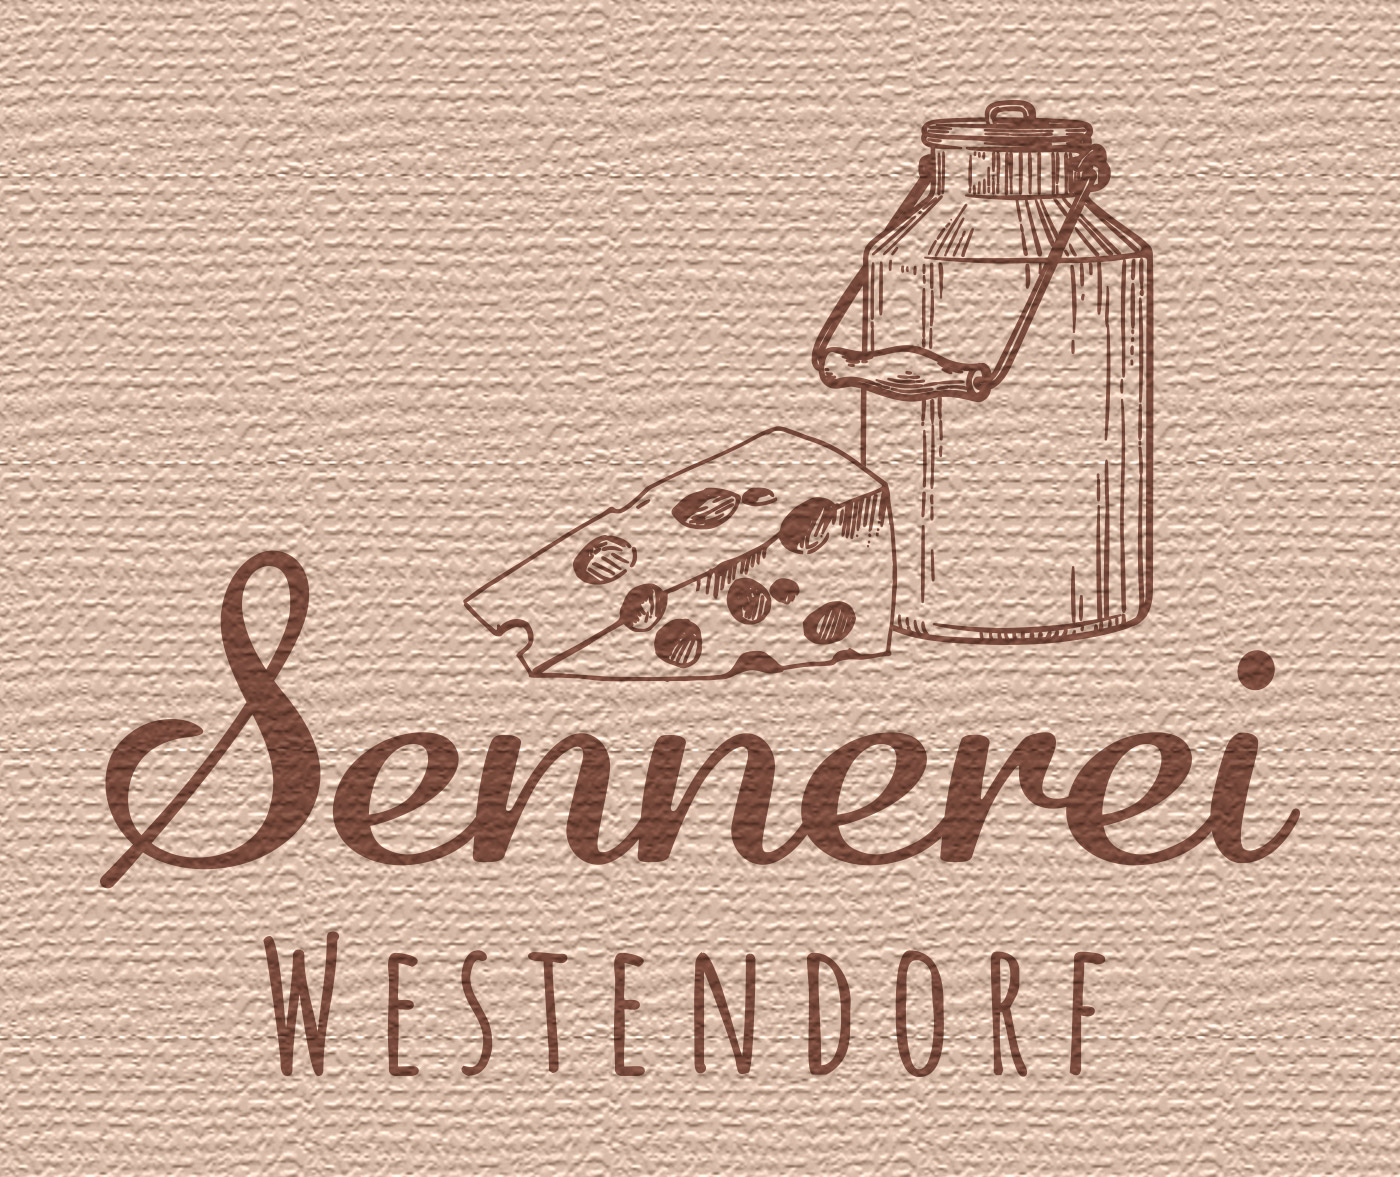 Sennerei Westendorf